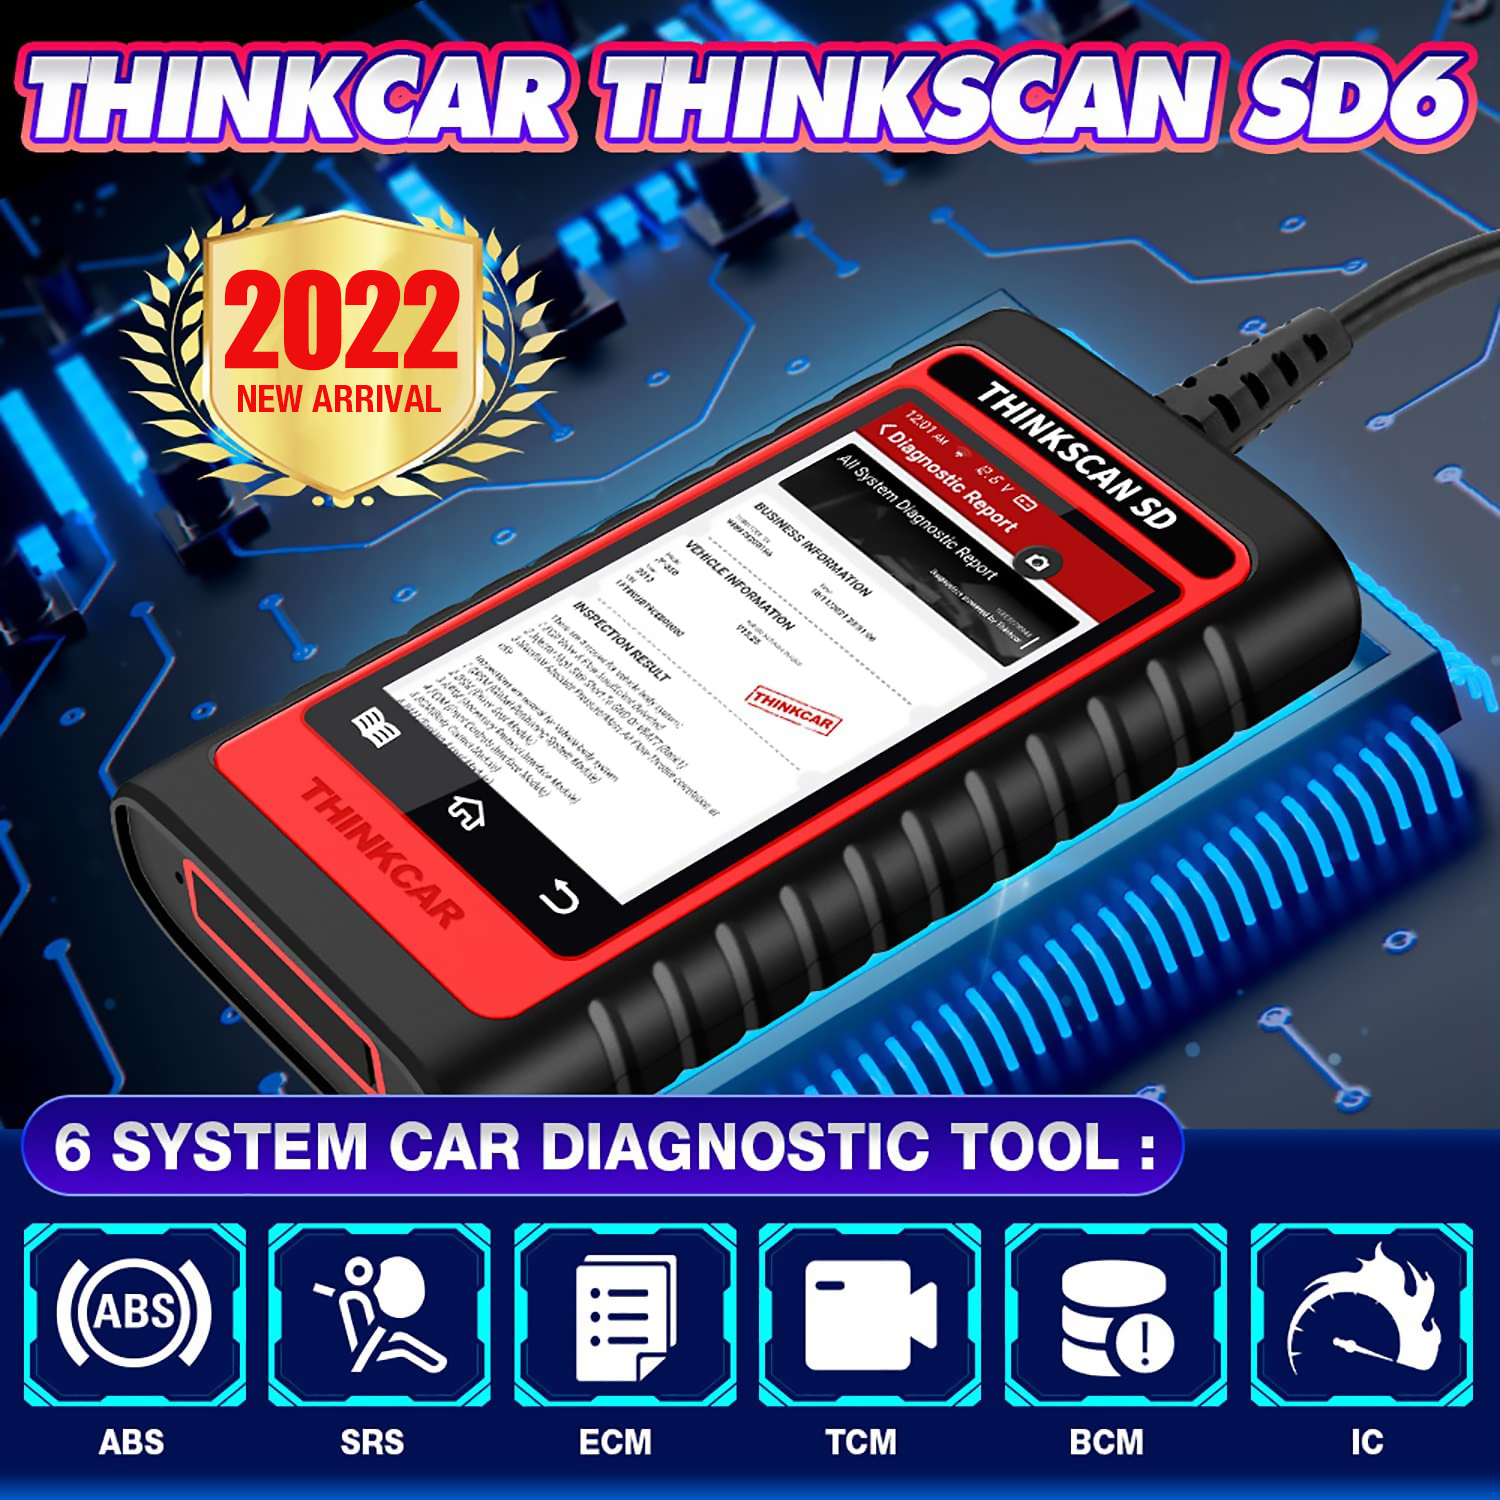 ThinkScan-SD6-ABS-SRS-ECM-TCM-BCM-IC-OBD2-Scanner-AF-Reset-28-Reset-Function-Car-Scan-Tool-Code-Reader-Auto-Diagnostic-Tool-1005003149718342